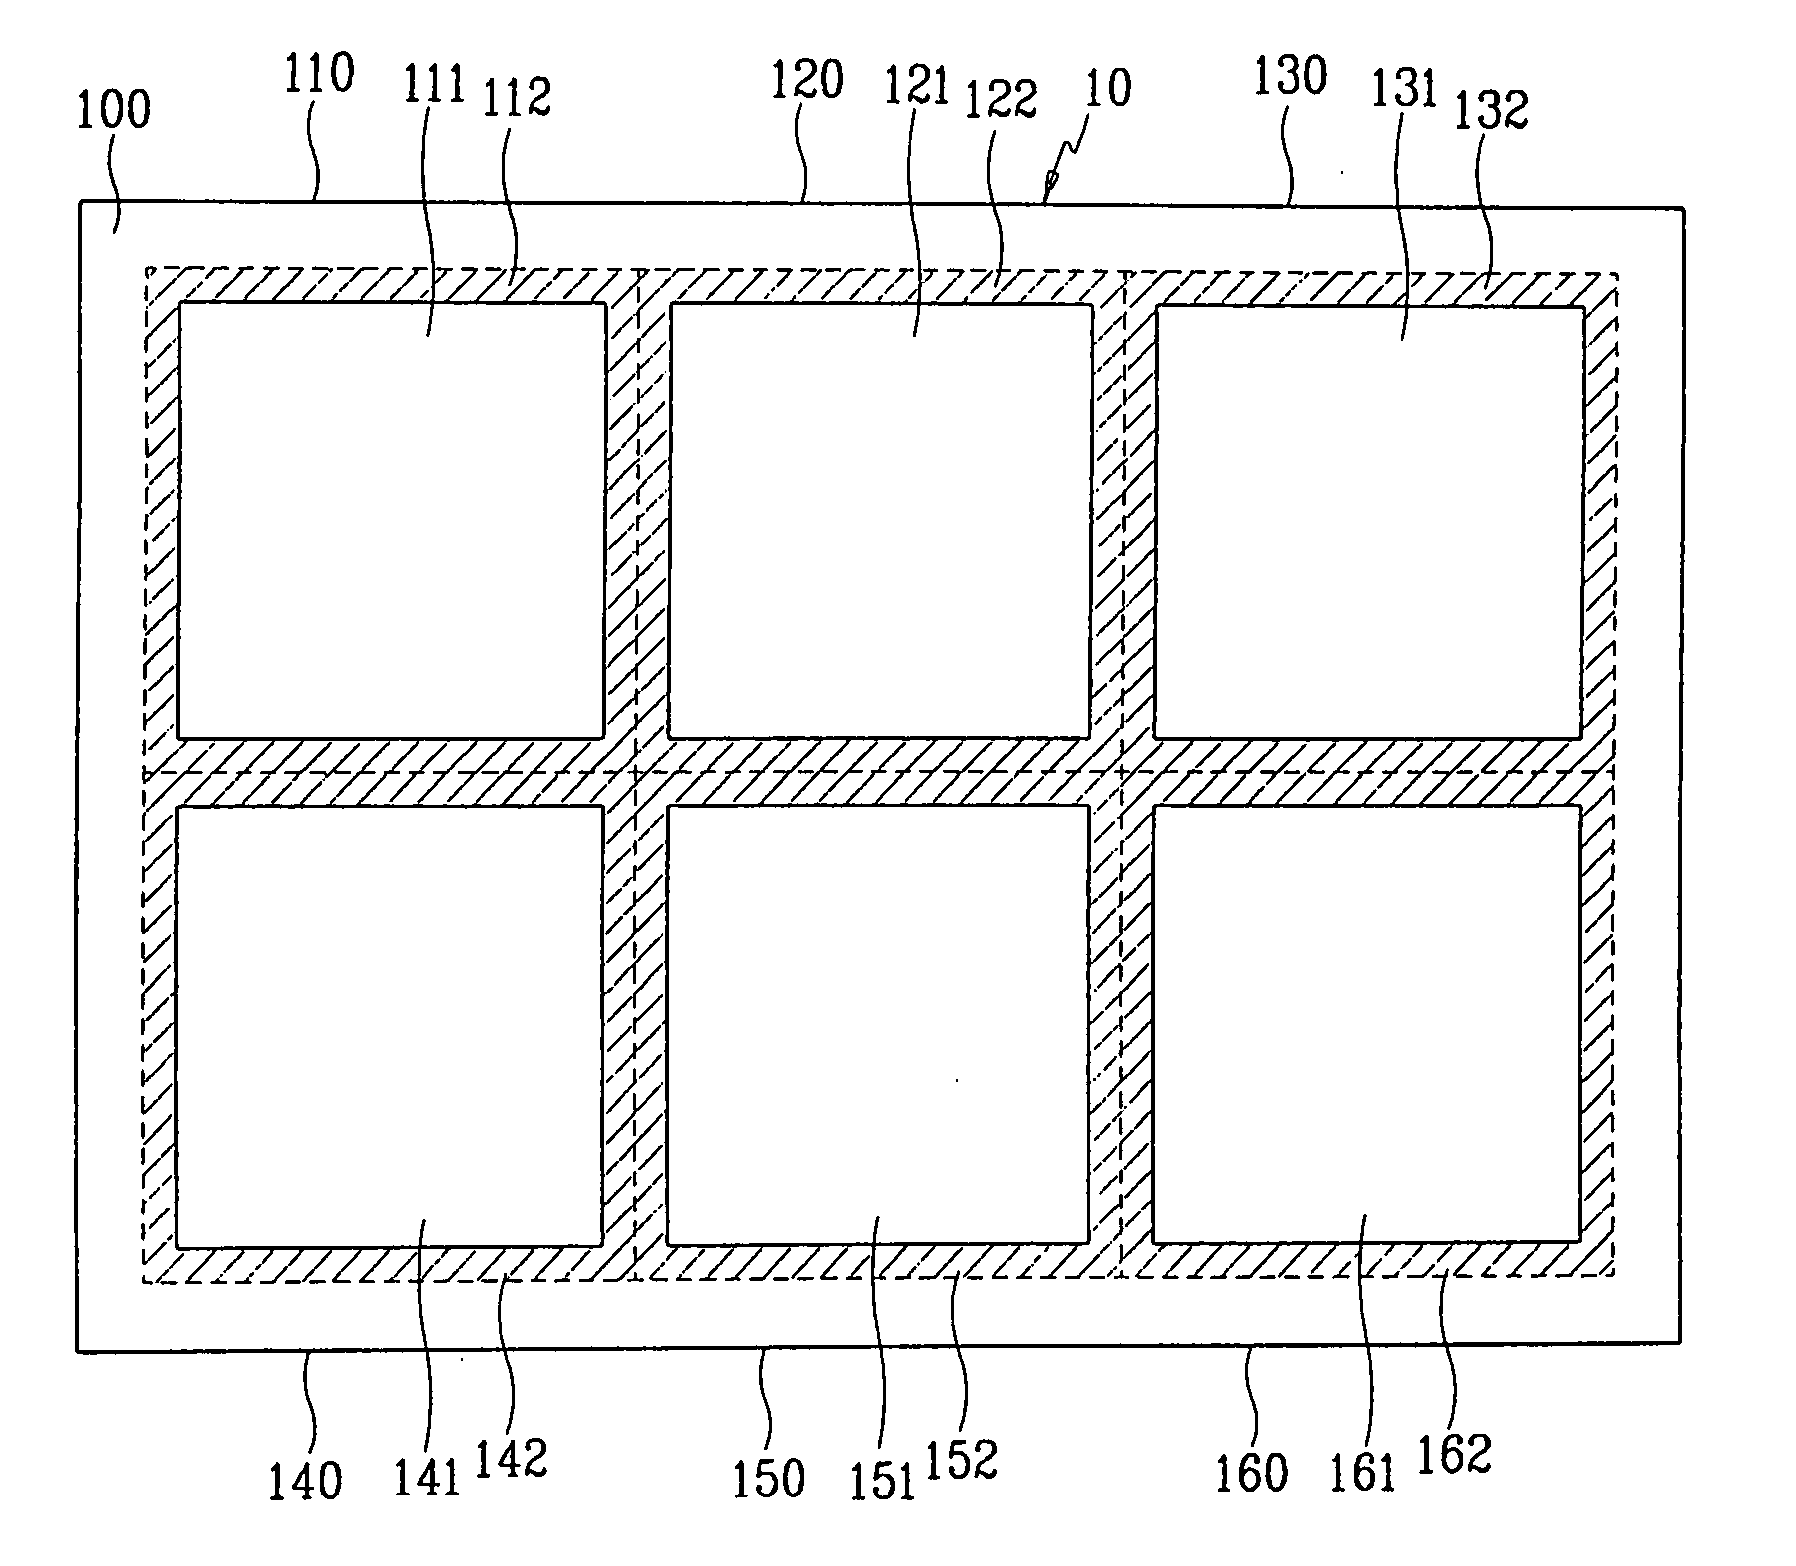 Thin film transistor array panel for liquid crystal display